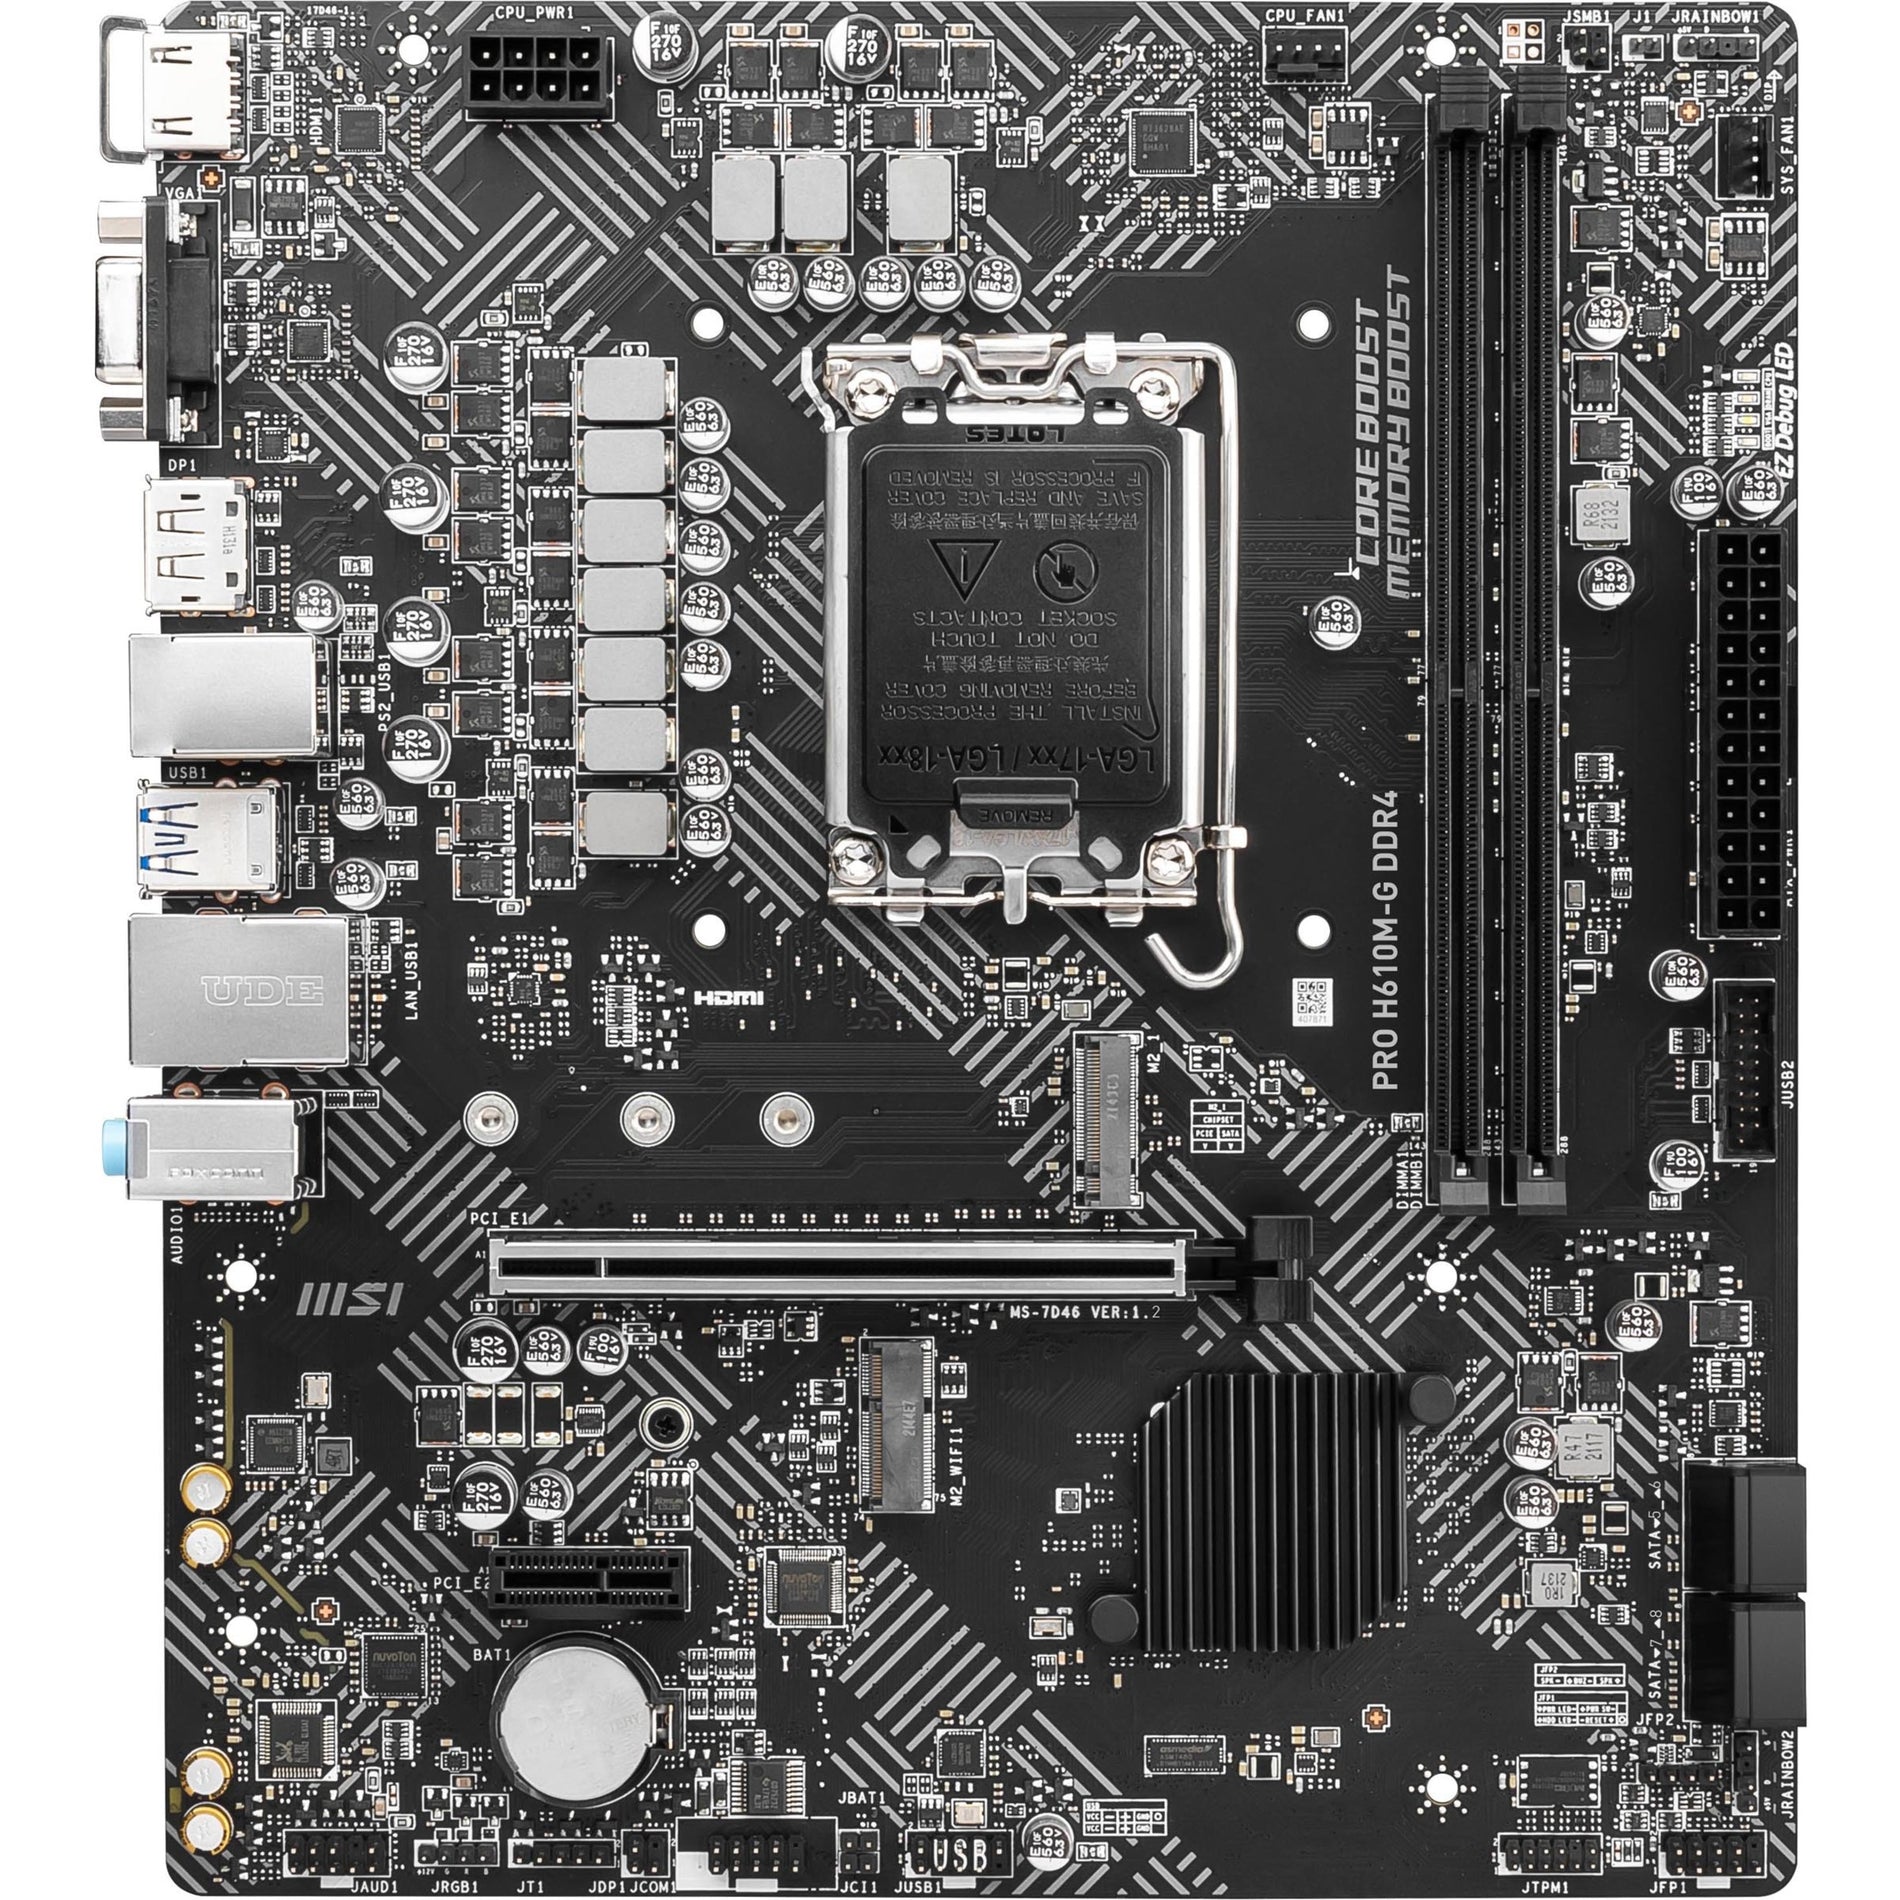 MSI PRO H610M-G DDR4 Desktop Motherboard - Micro ATX, Intel H610 Chipset, LGA-1700 Socket (PROH610MGD4)